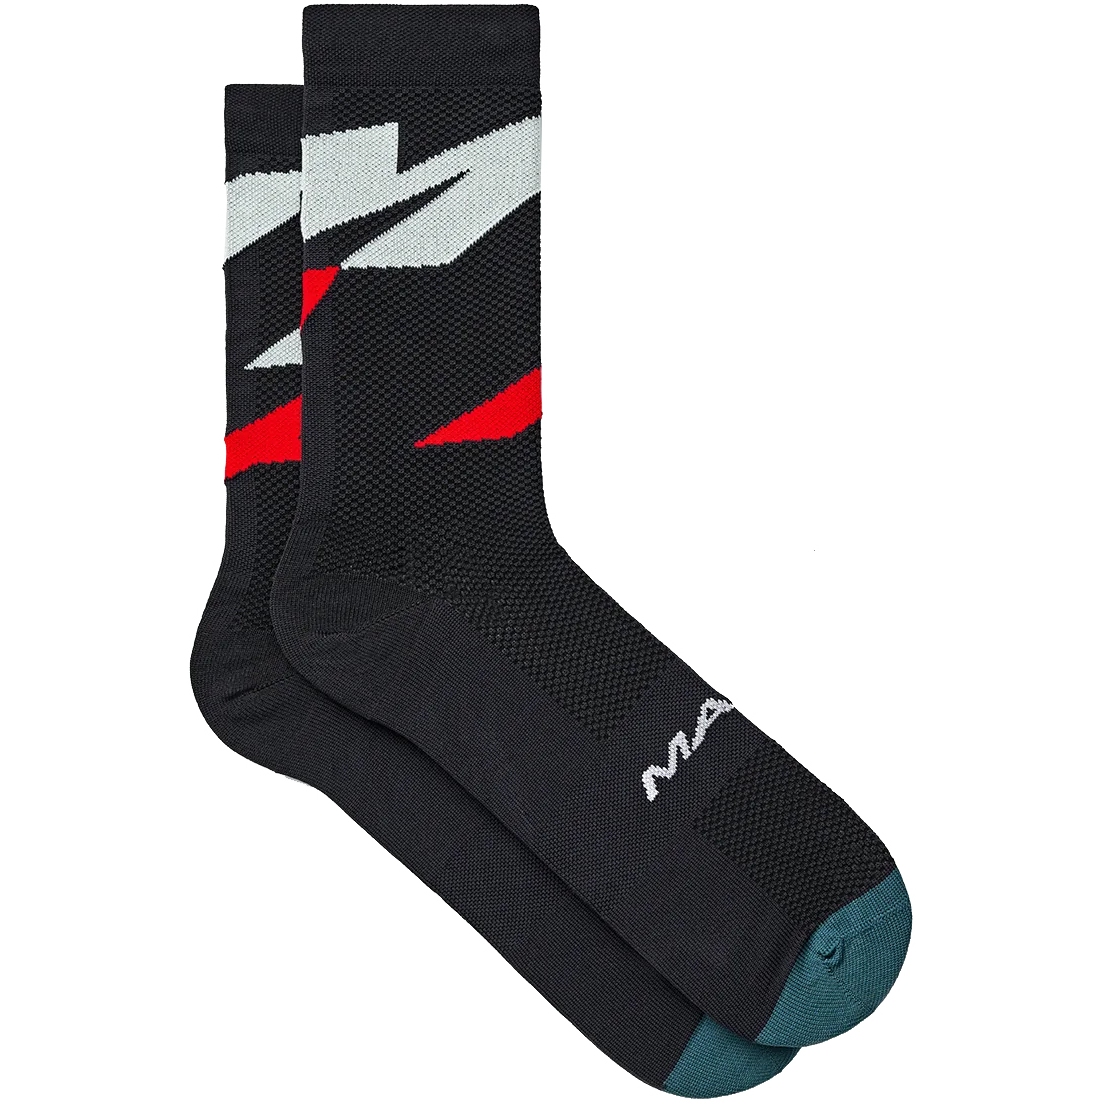 Picture of MAAP Emerge Pro Air Socks - black